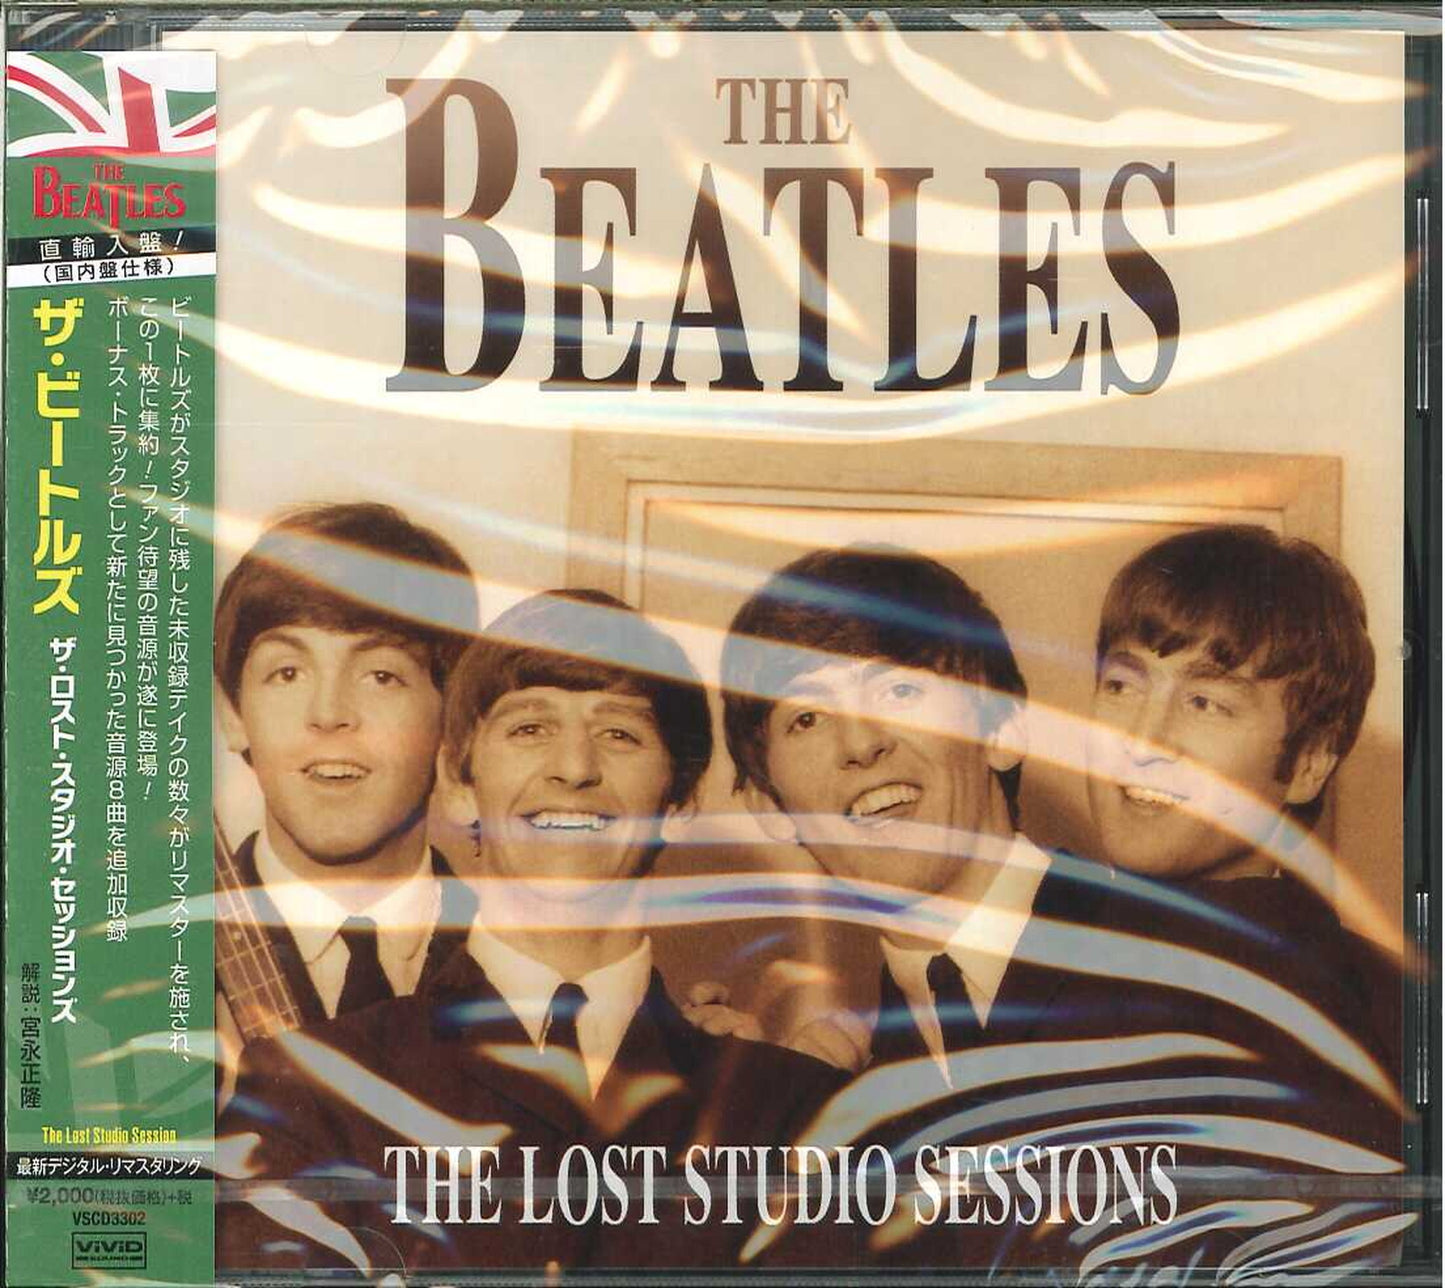 The Beatles - The Lost Studio Sessions - Import CD With Japan Obi Bonus Track